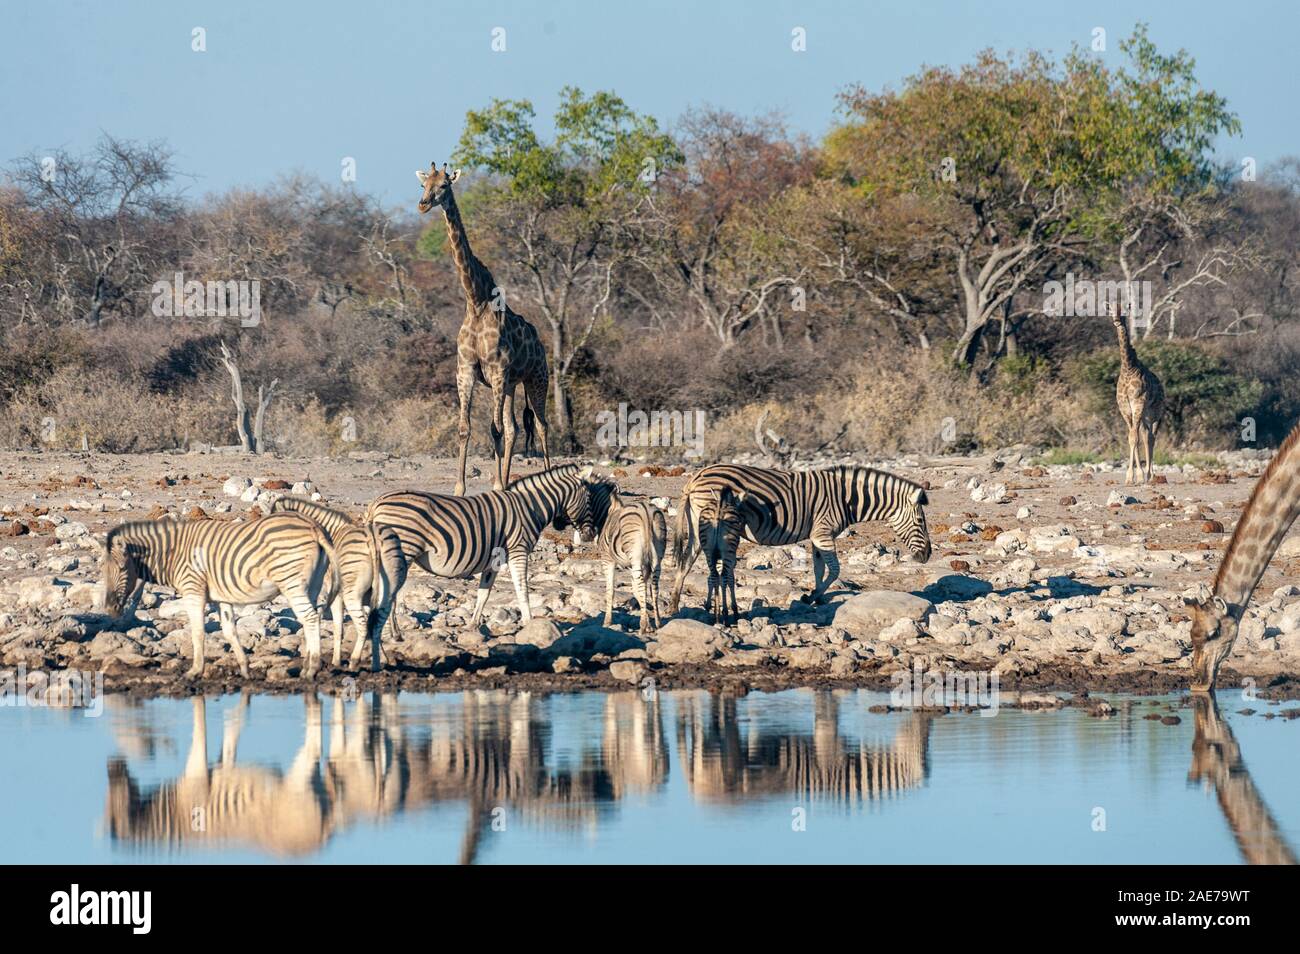 A group of Angolan Giraffe - Giraffa giraffa angolensis- and Burchells zebra -Equus quagga- burchellii- drinking from a waterhole, while being reflected in the surface of the water. Etosha National Park, Namibia. Stock Photo